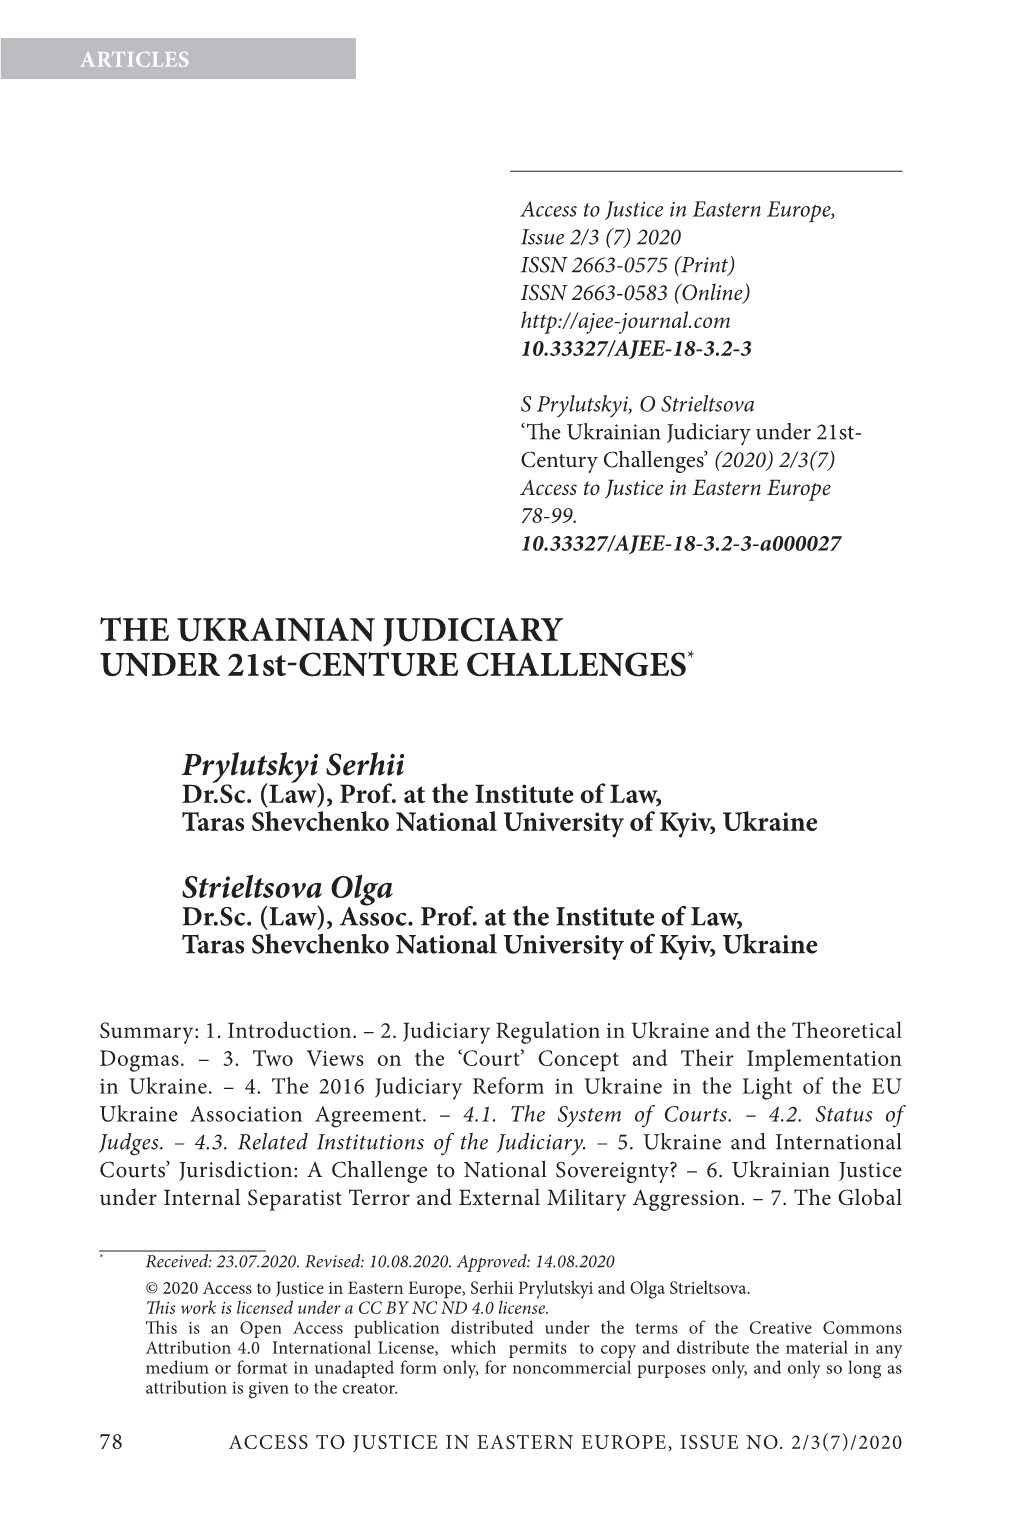 Ukrainian Judiciary Under the XXI Century Challenges